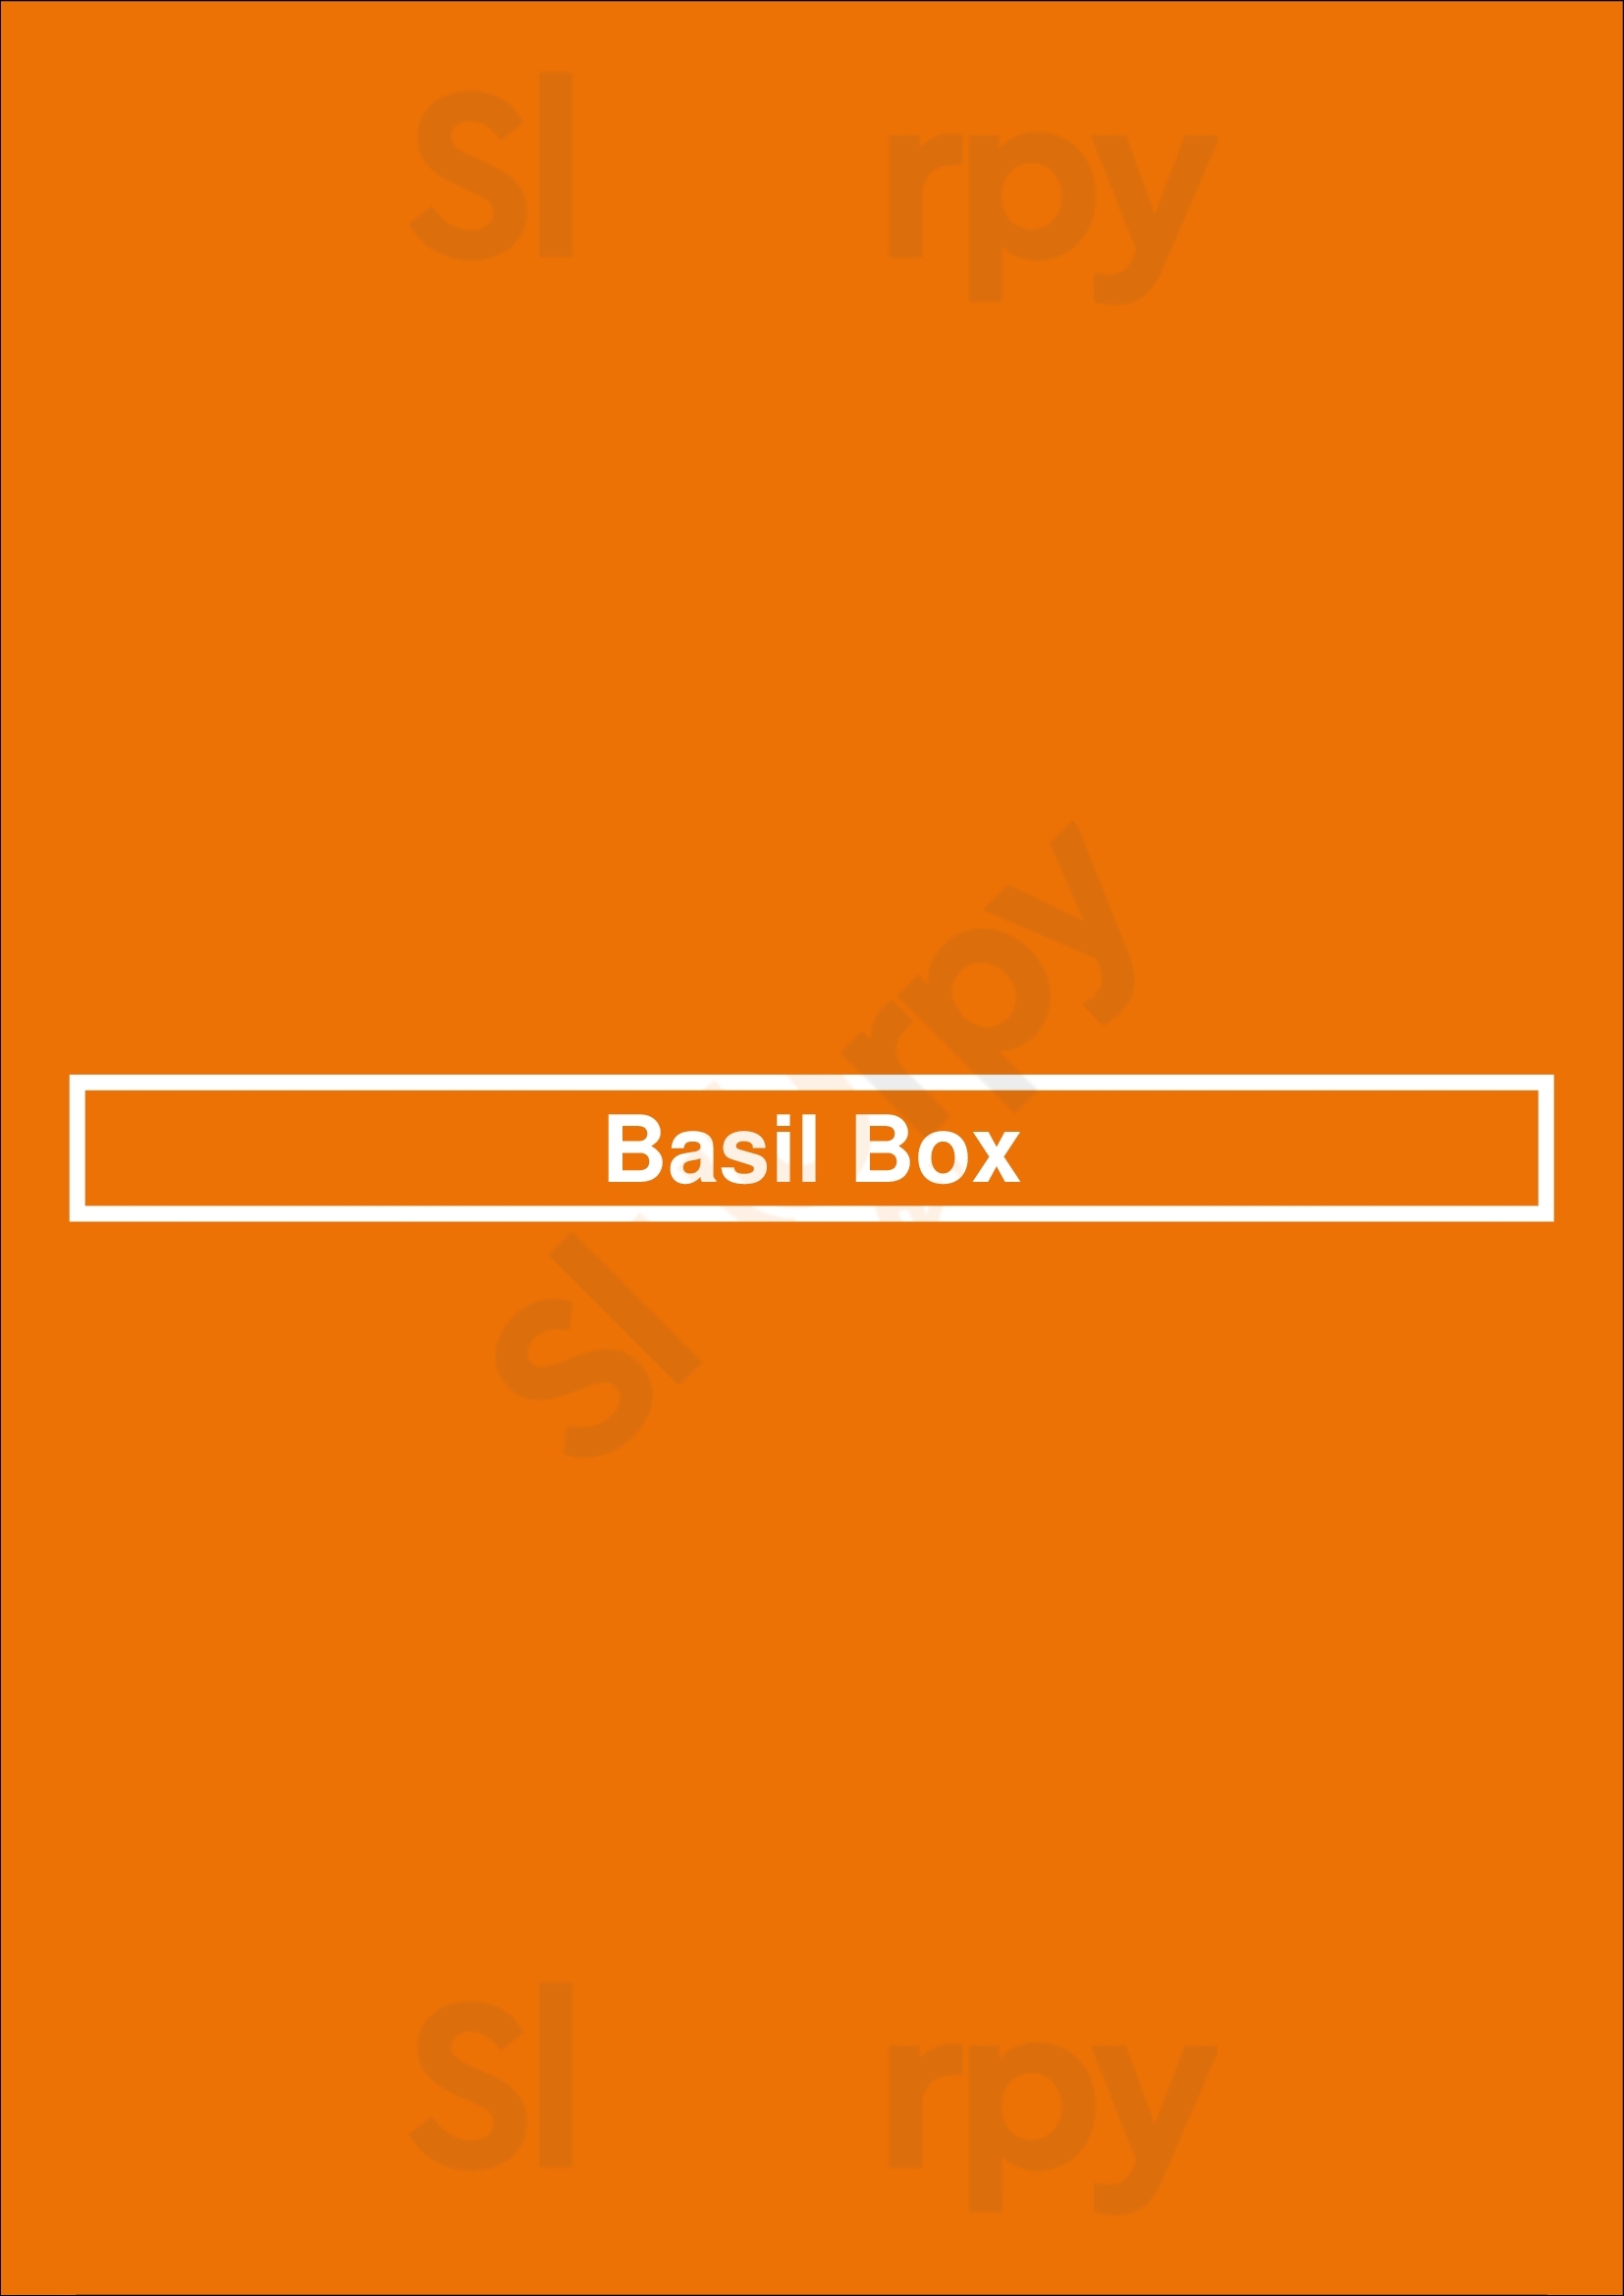 Basil Box Mississauga Menu - 1